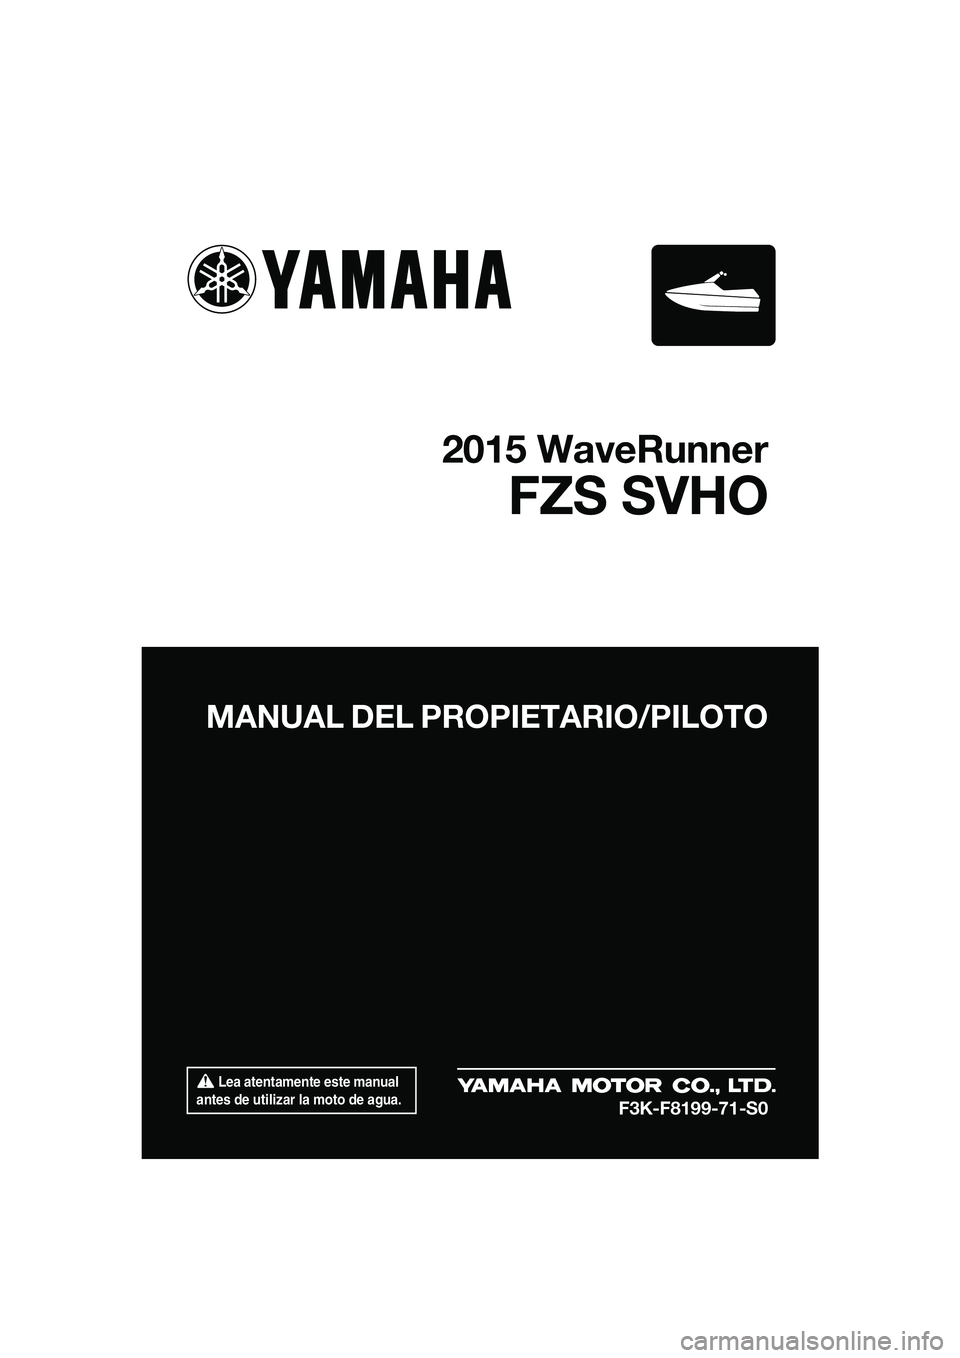 YAMAHA FZS SVHO 2015  Manuale de Empleo (in Spanish)  Lea atentamente este manual 
antes de utilizar la moto de agua.
MANUAL DEL PROPIETARIO/PILOTO
2015 WaveRunner
FZS SVHO
F3K-F8199-71-S0
UF3K71S0.book  Page 1  Tuesday, August 5, 2014  4:58 PM 